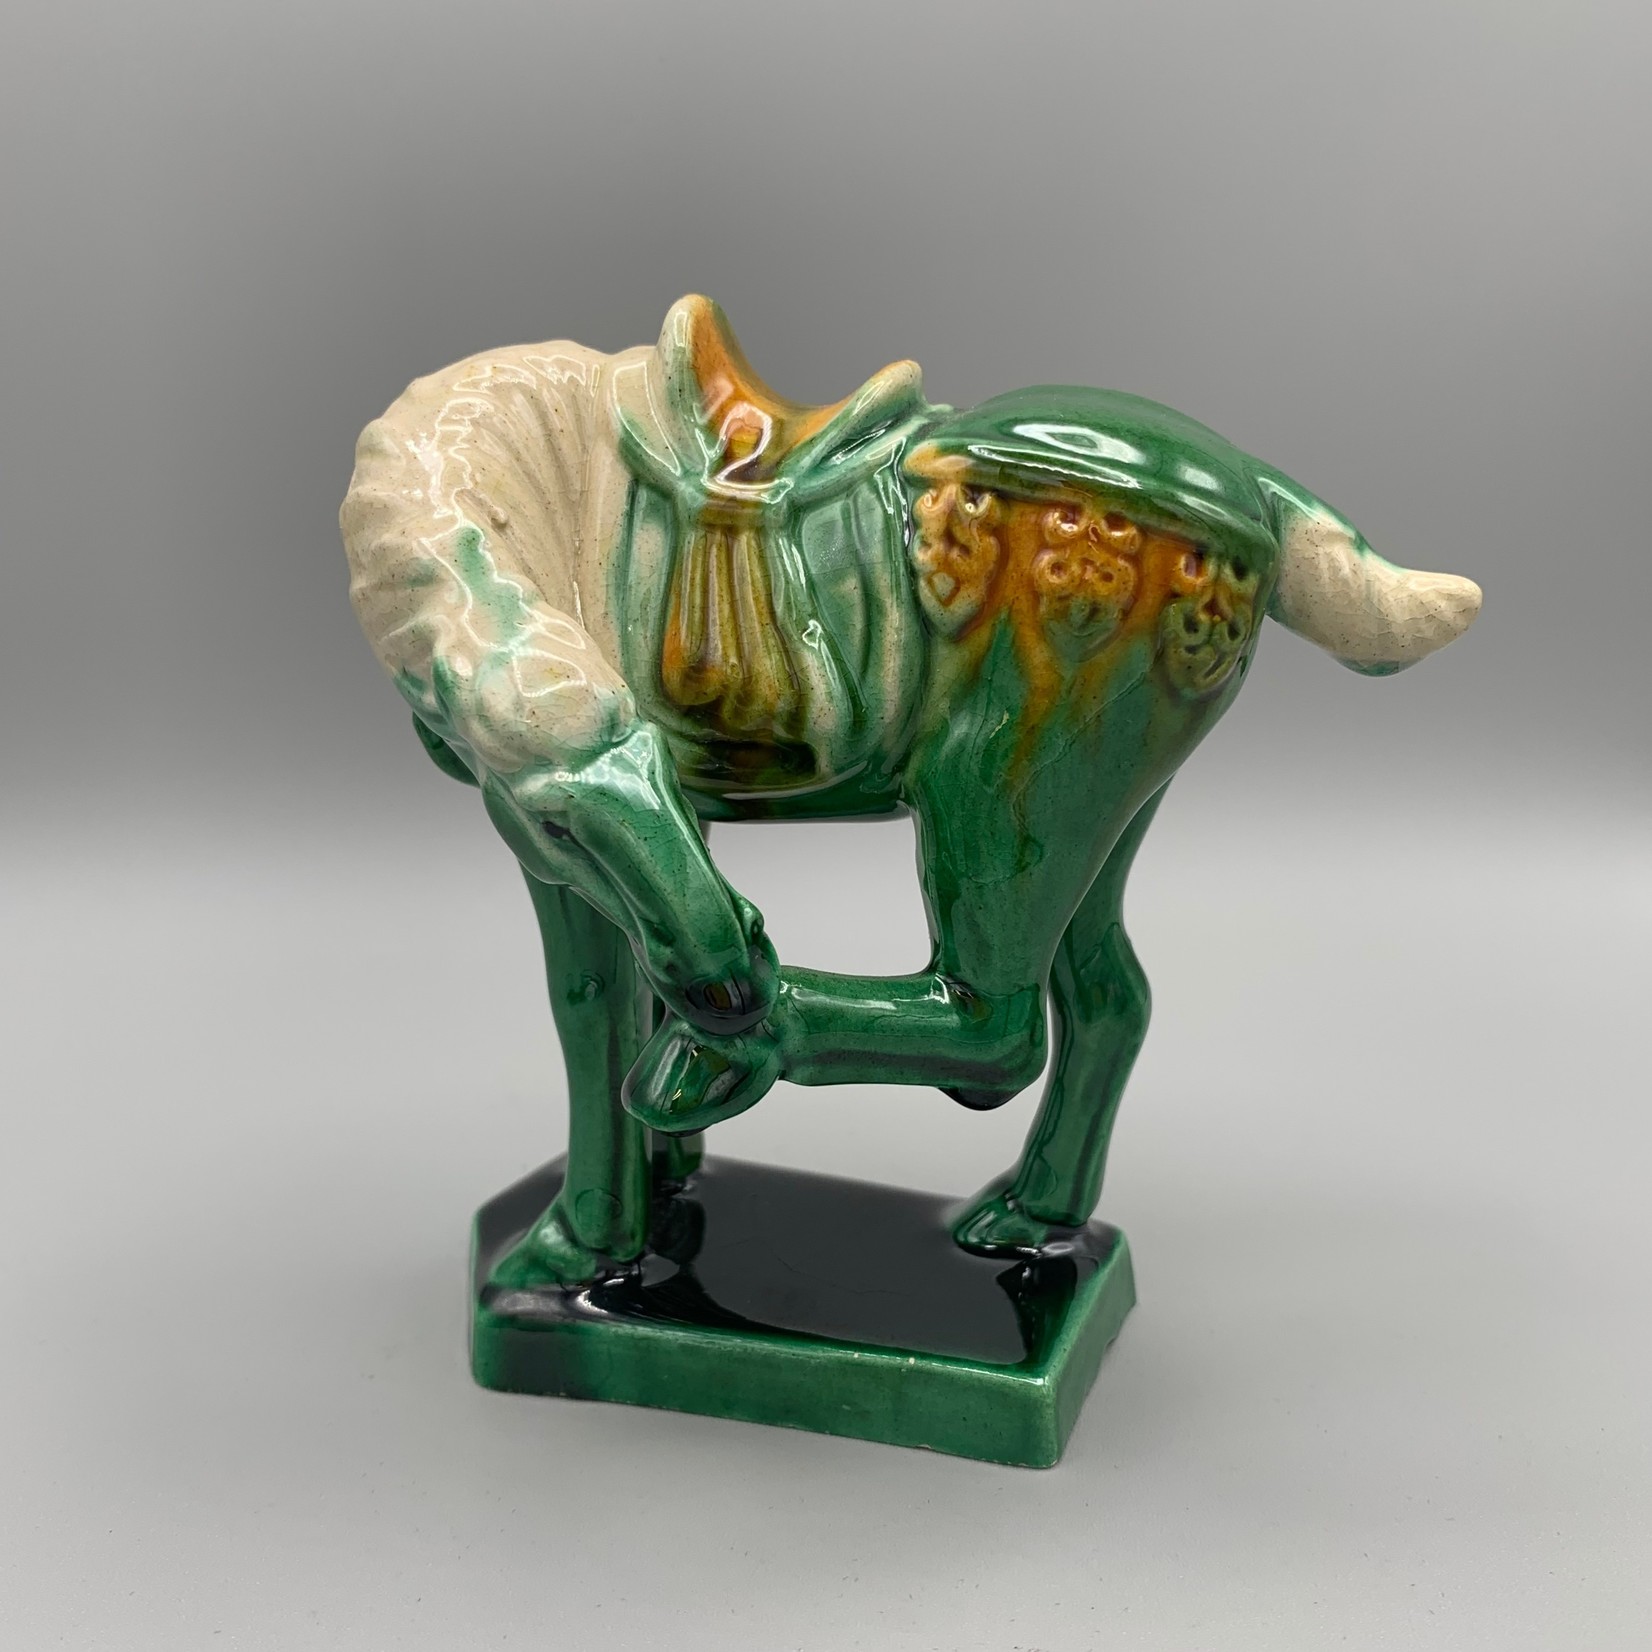 Porcelain Horse Figurine